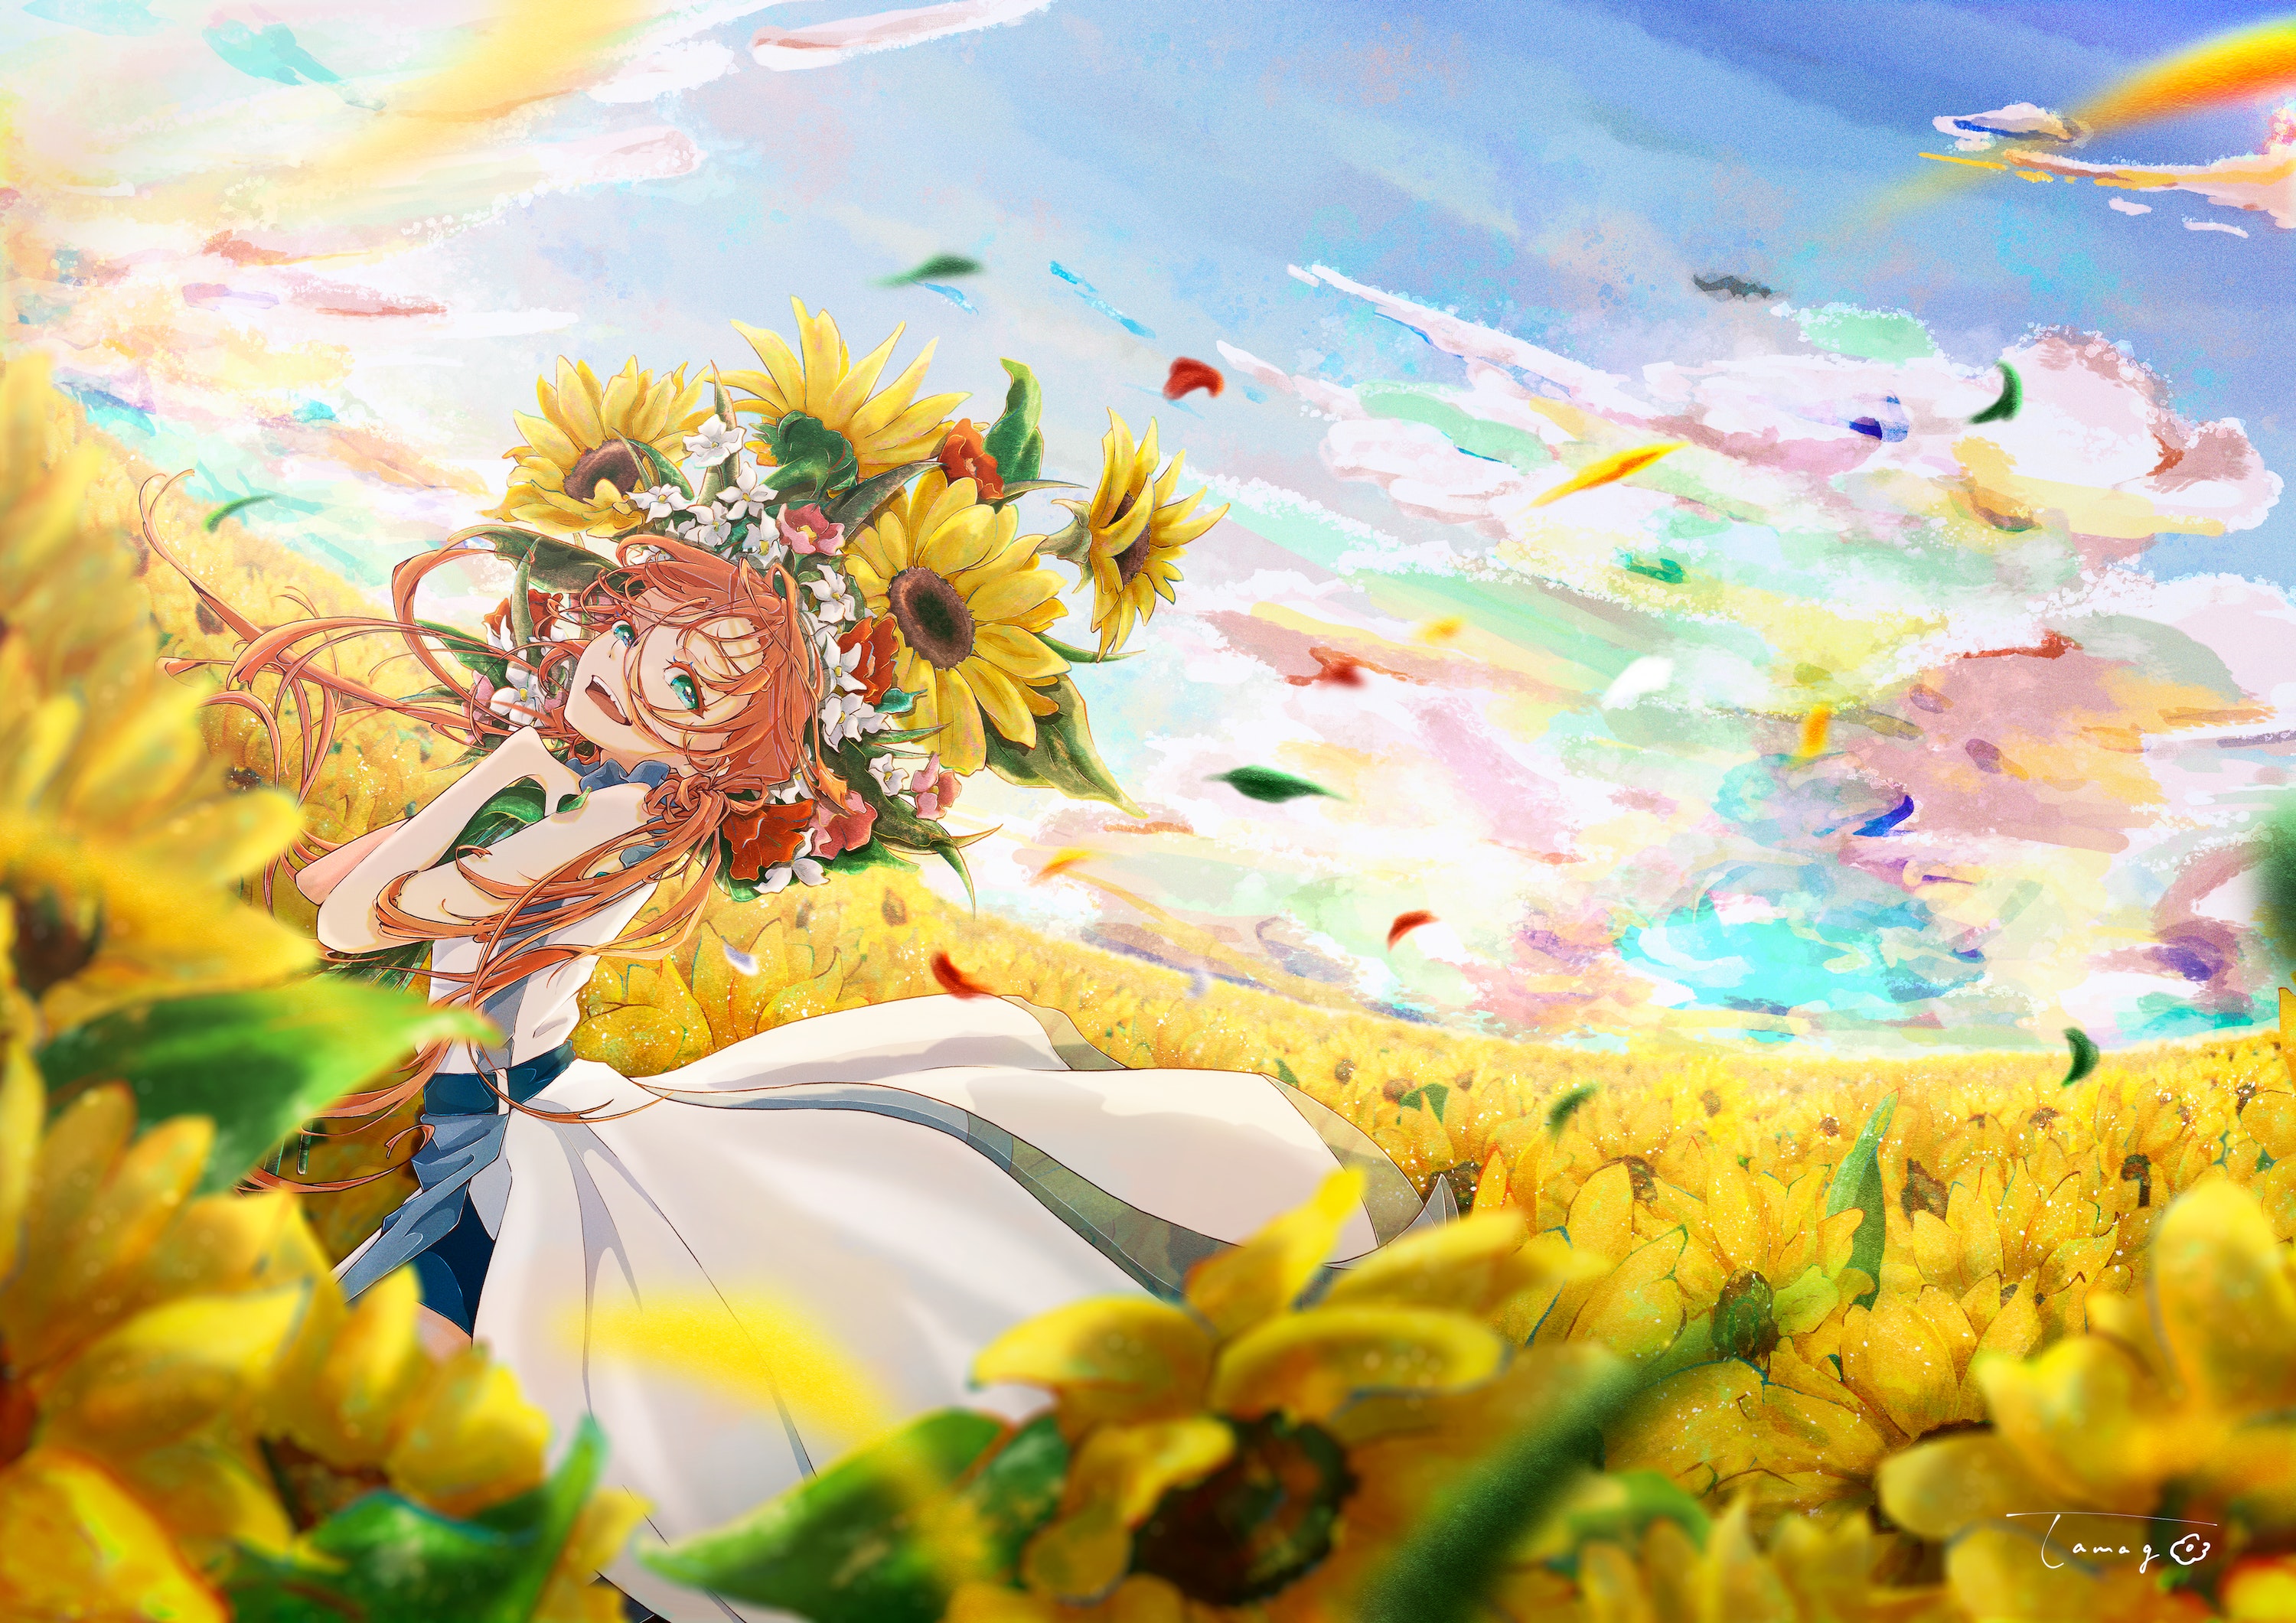 Digital Art Artwork Illustration Anime Field Sky Flowers Anime Girls White Dress Blonde Clouds Sunfl 3000x2121